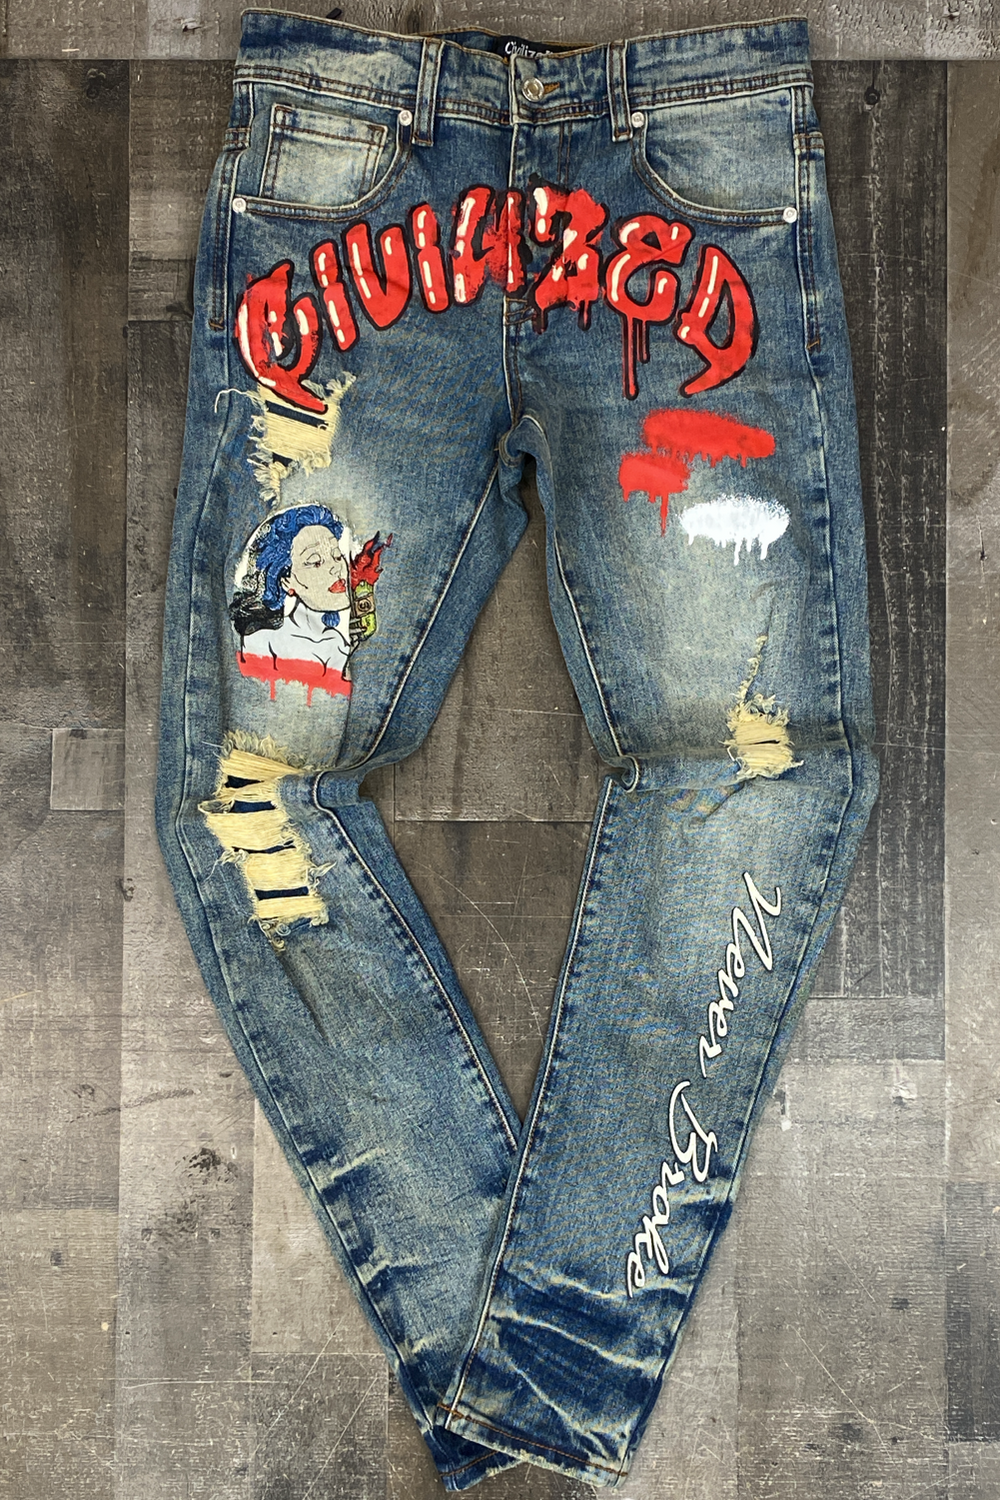 Civilized- never broke ripped denim jeans